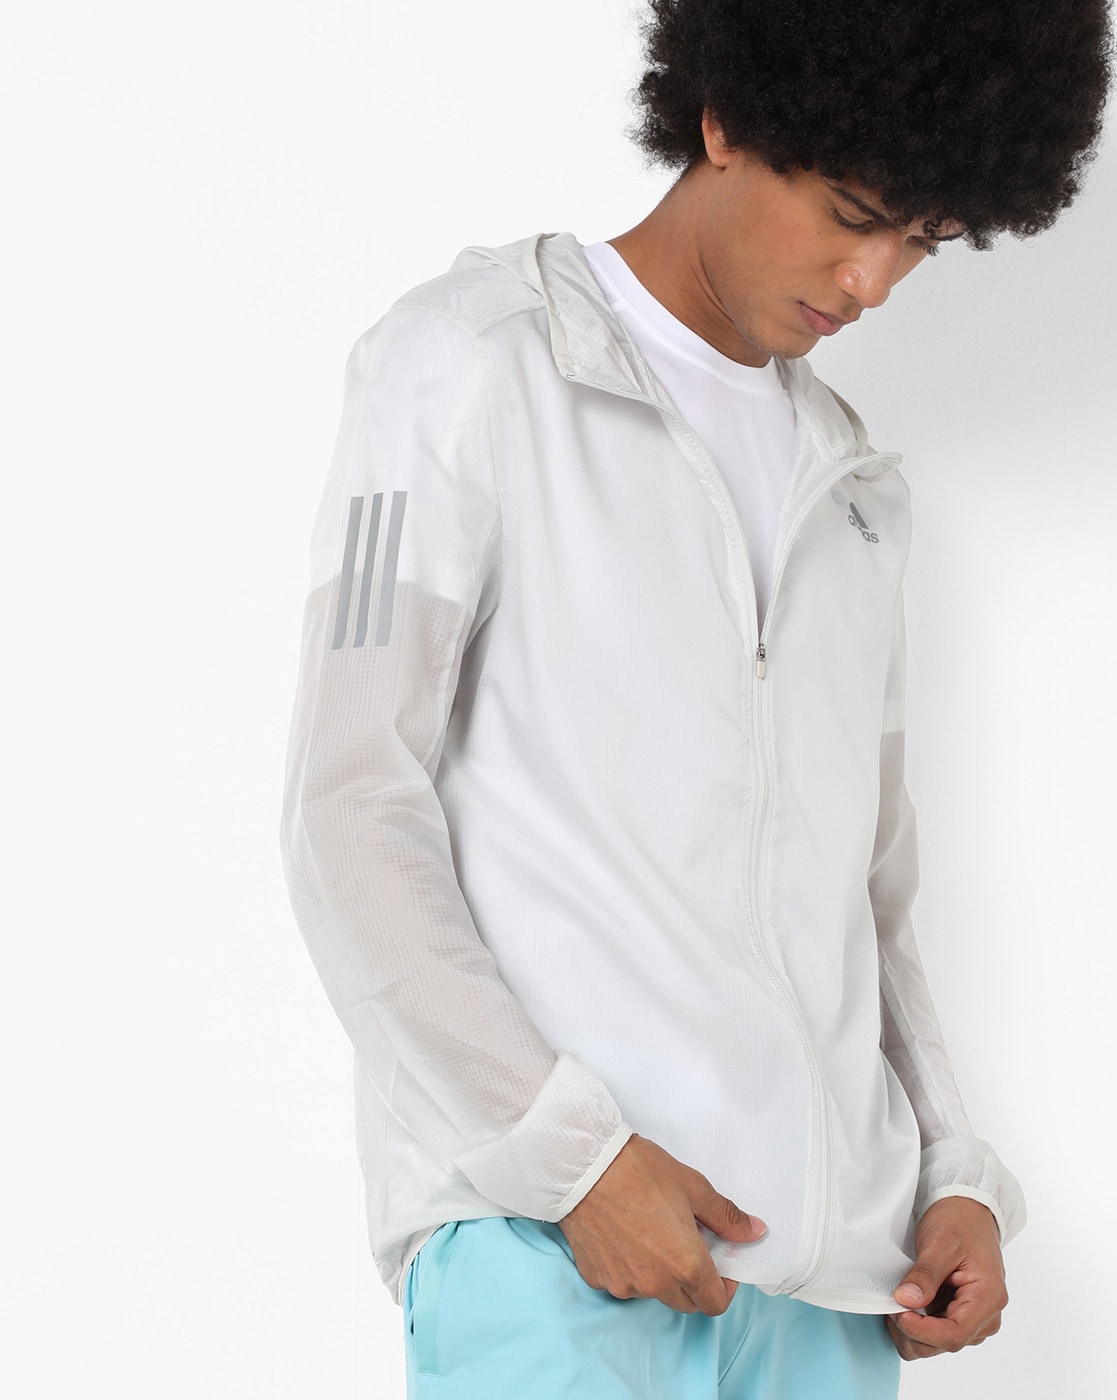 buy adidas rain jacket online india